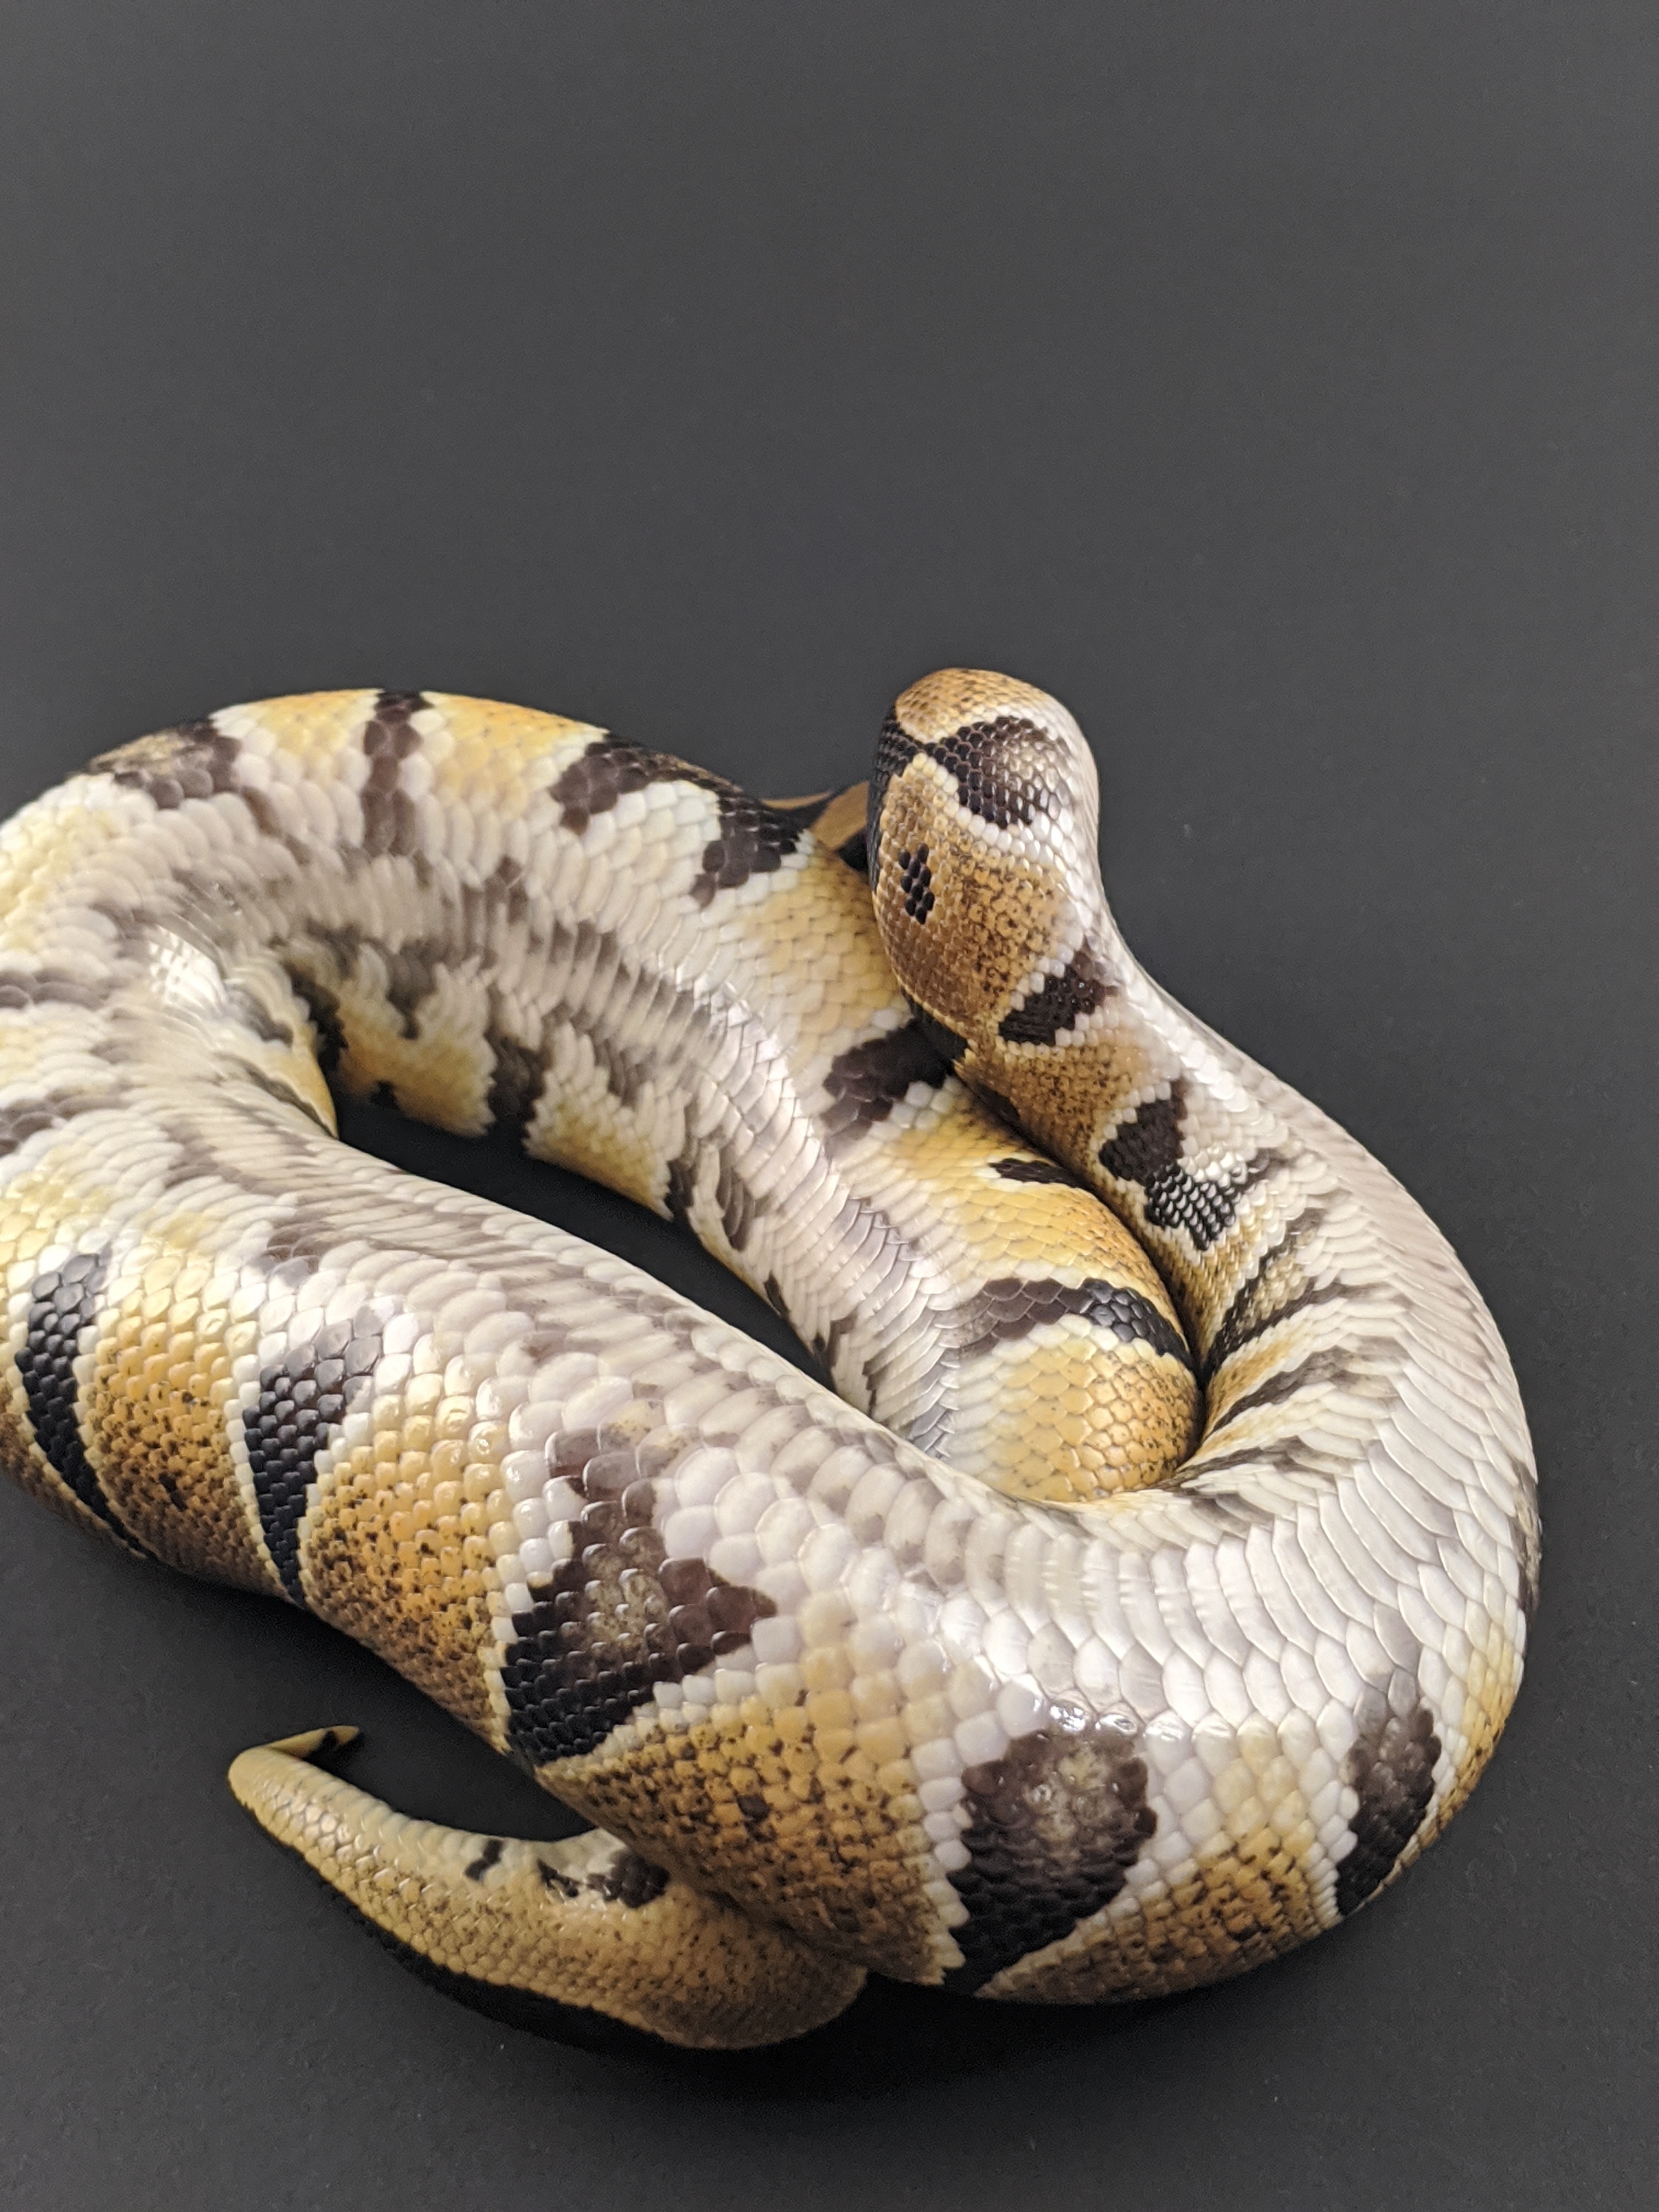 African imports ball pythons - Ball Pythons - MorphMarket Reptile Community